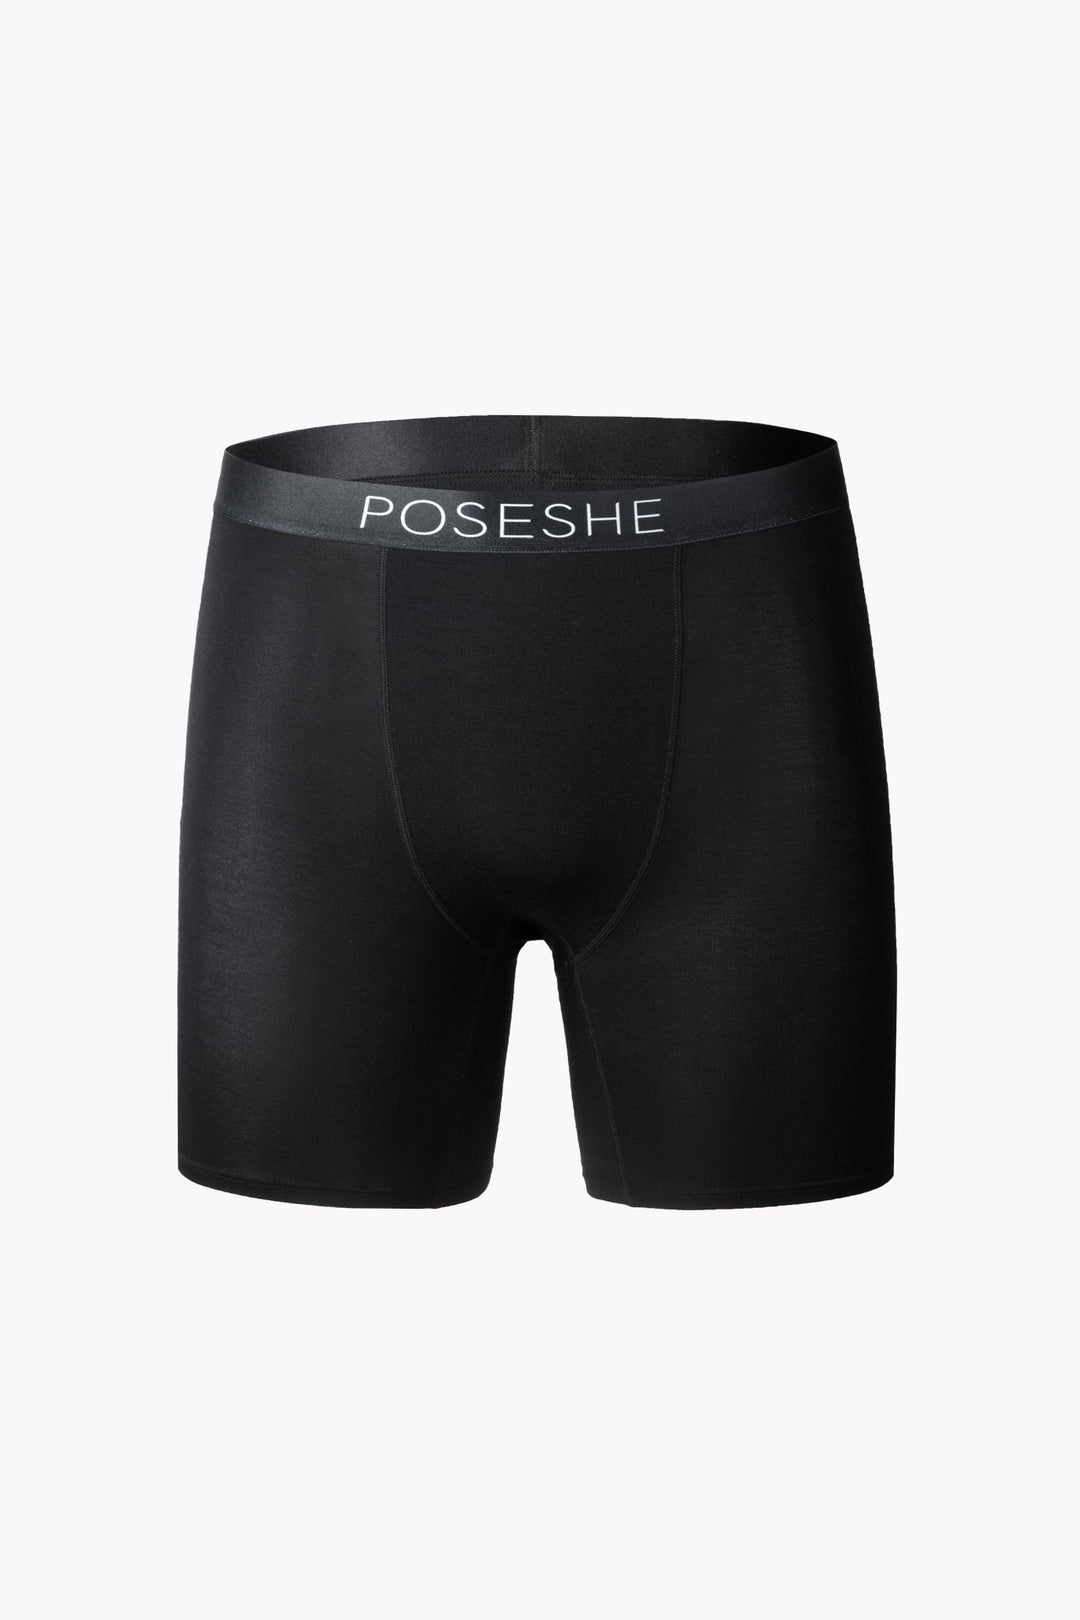 POSESHE Women's Boxer Briefs, Regular&Plus Size 8 inseam Female